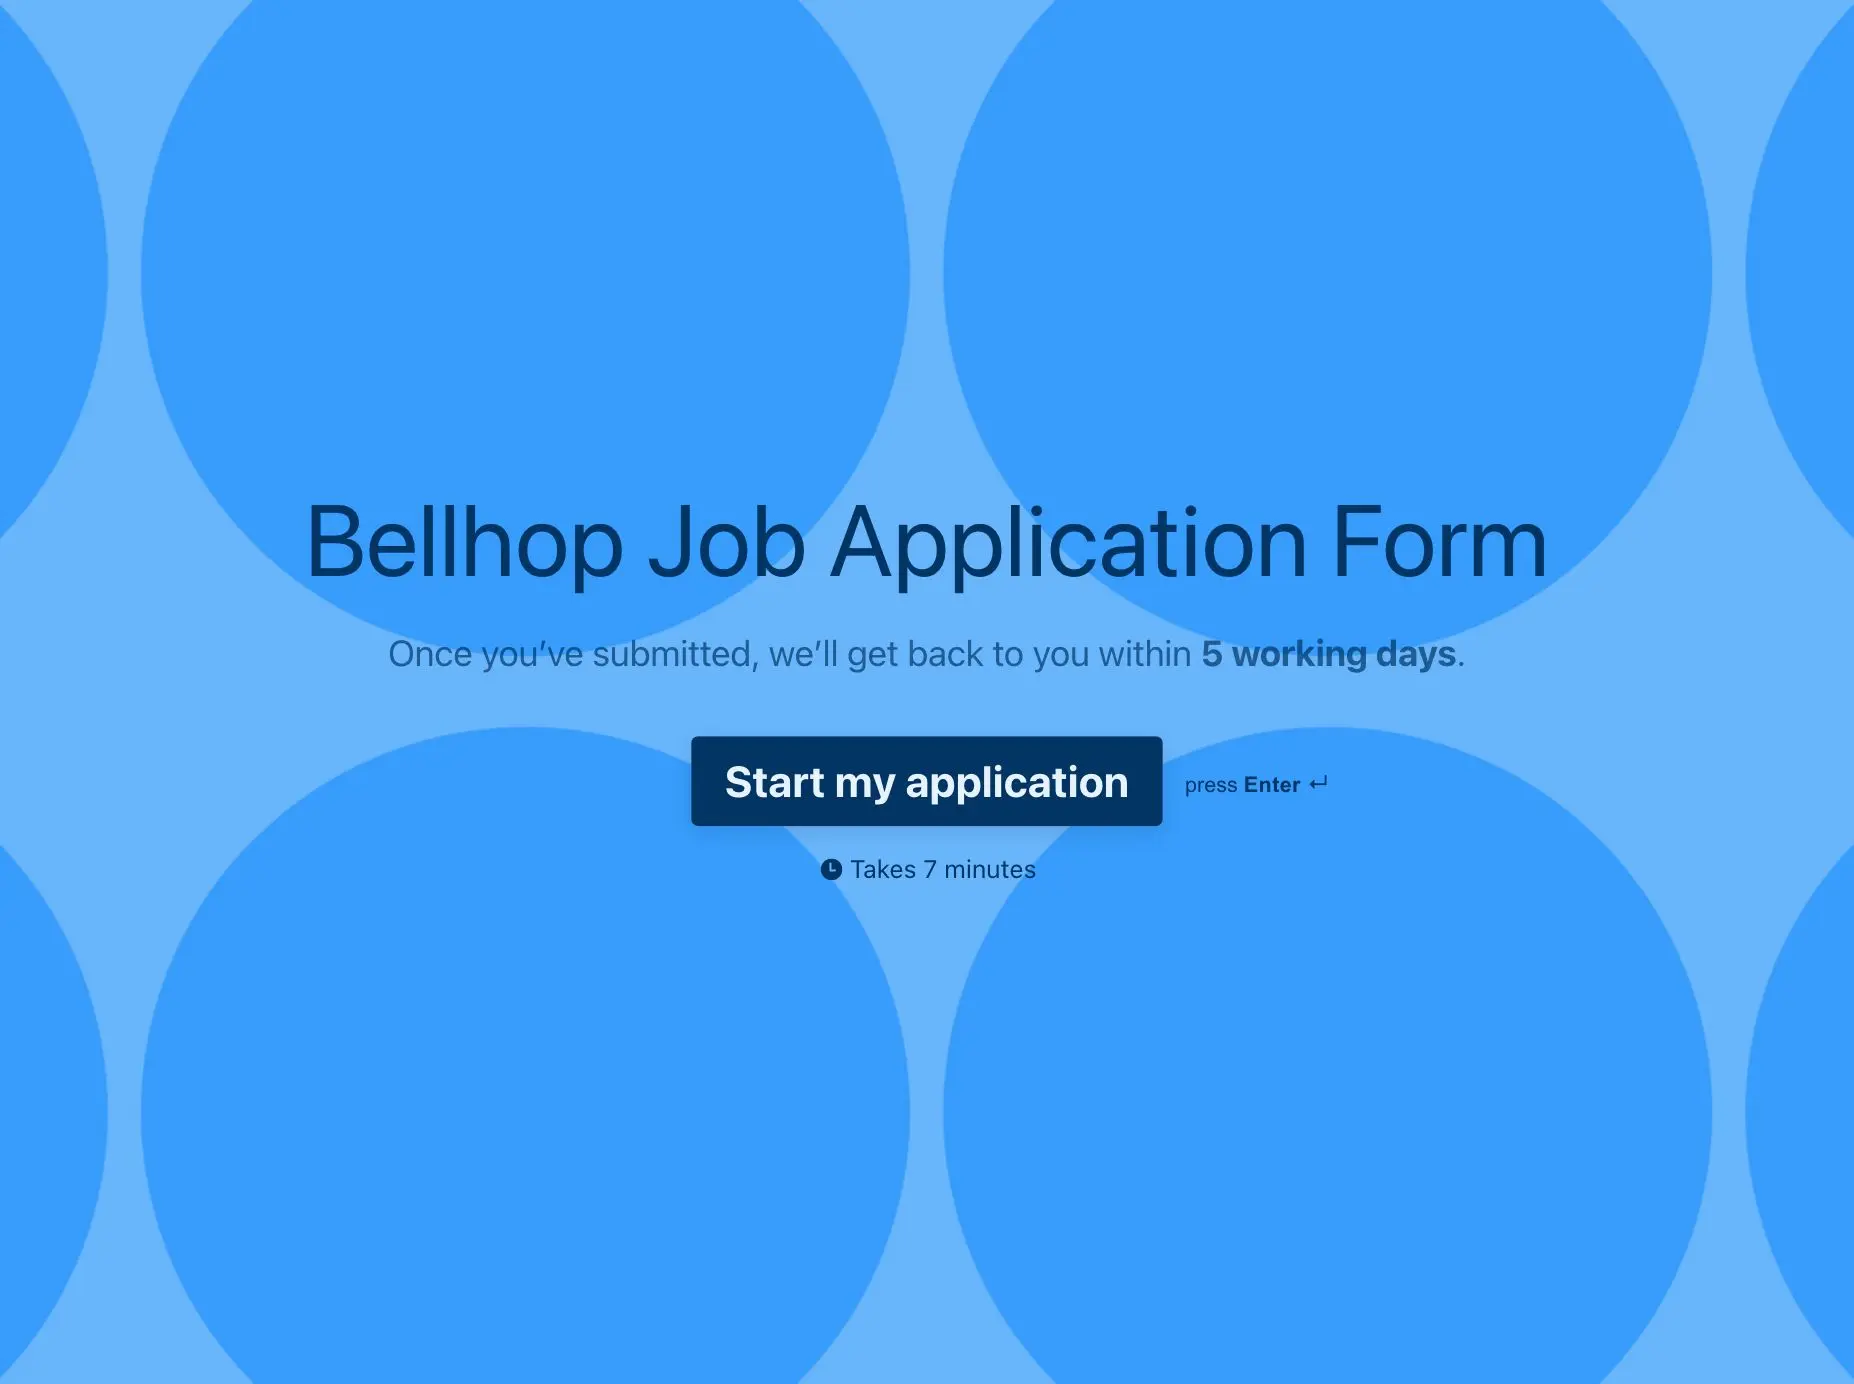 Bellhop Job Application Form Template Hero